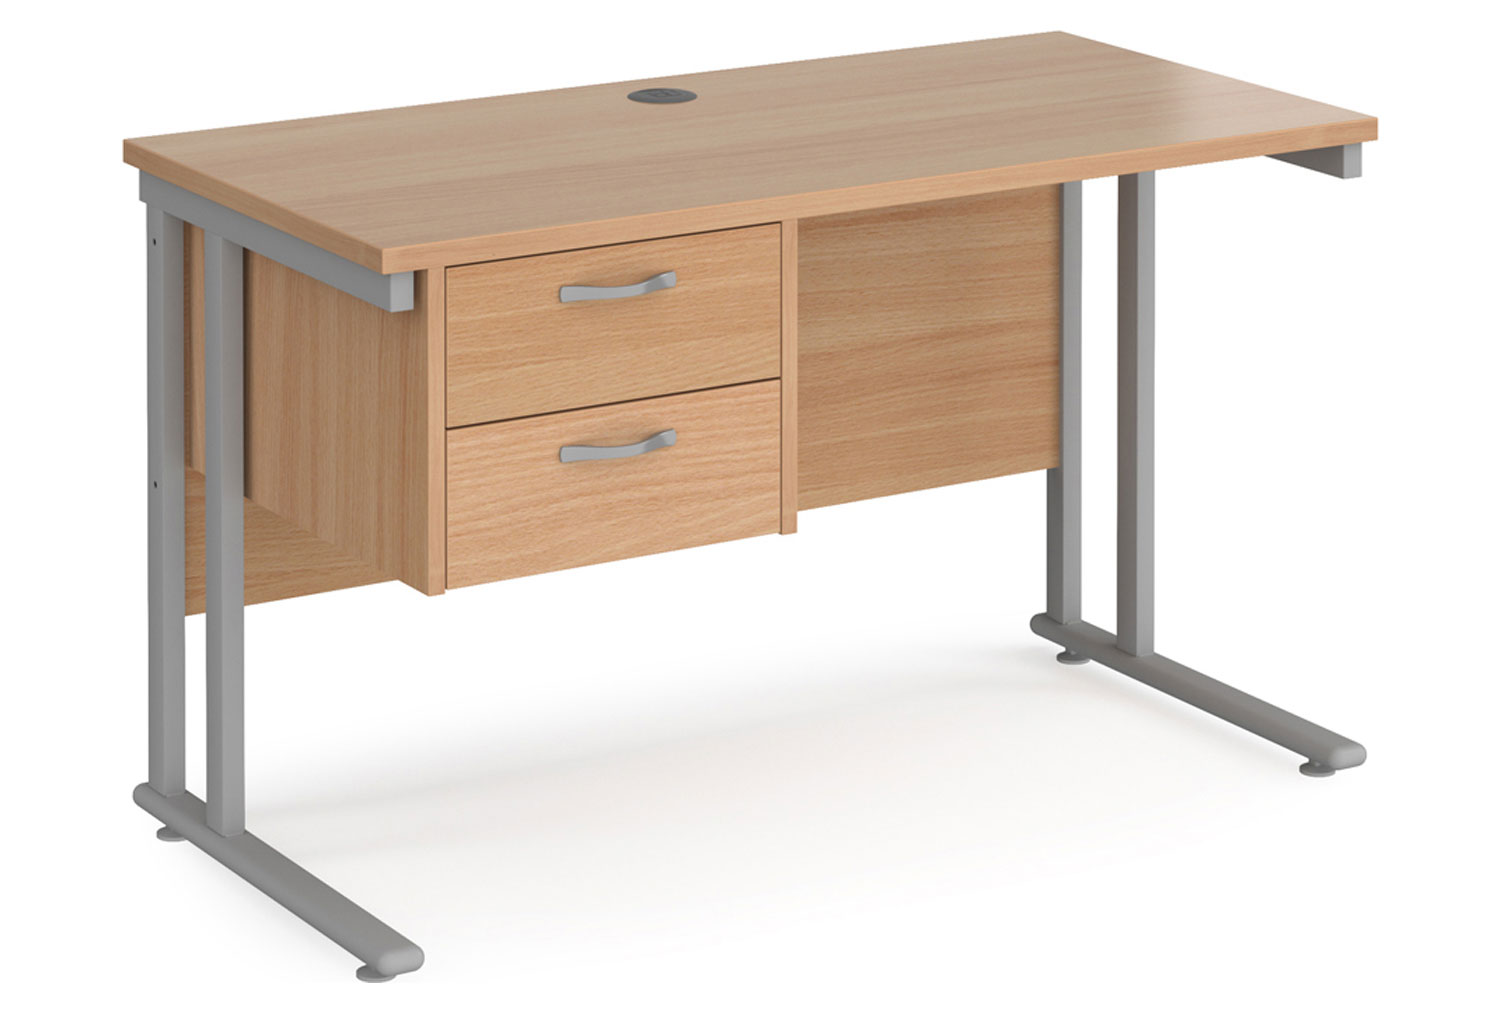 Value Line Deluxe C-Leg Narrow Rectangular Office Desk 2 Drawers (Silver Legs), 120w60dx73h (cm), Beech, Fully Installed